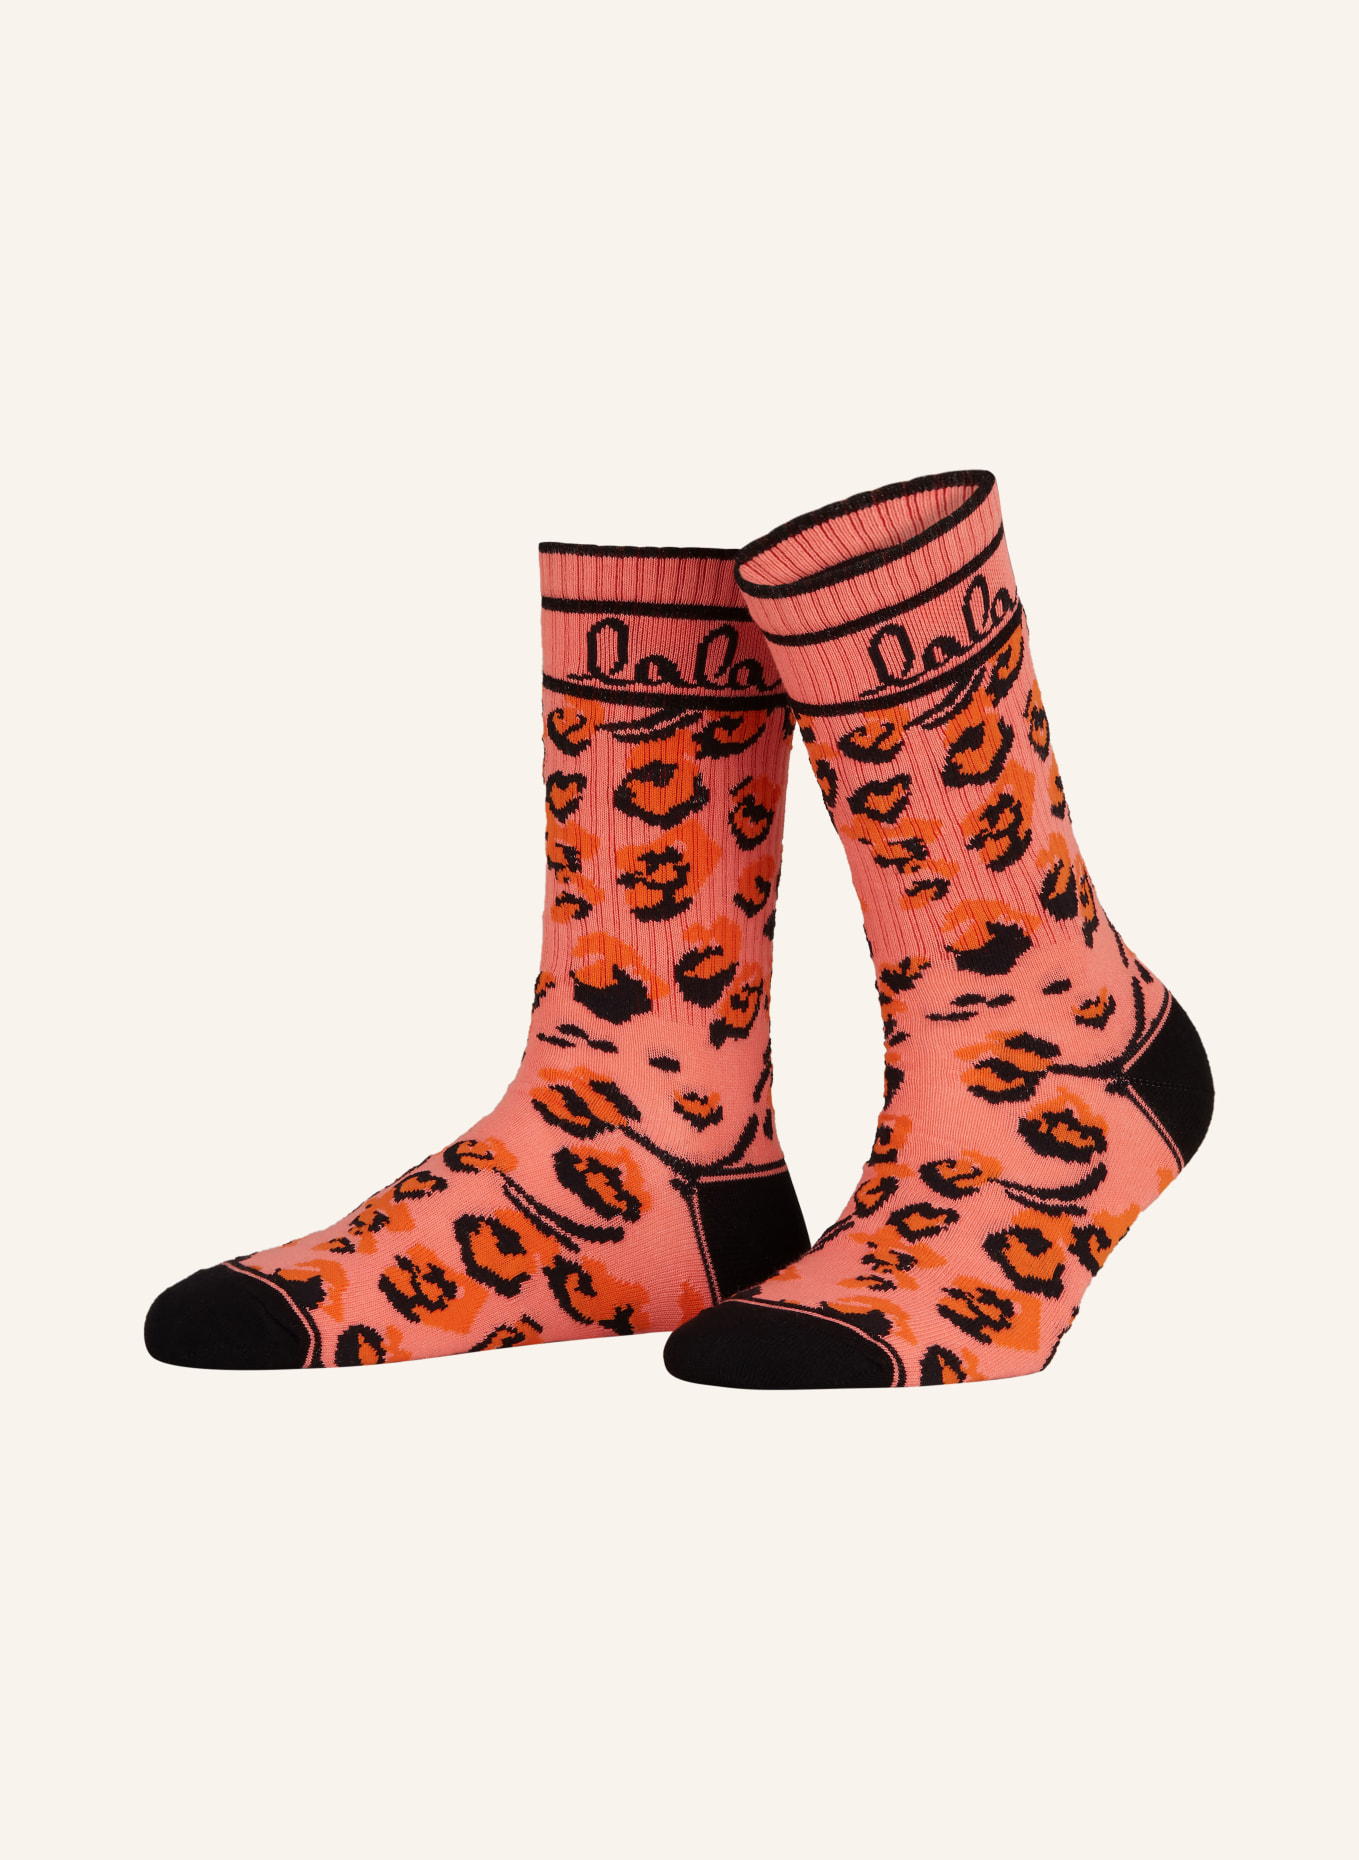 Lala Berlin Socks ANNA, Color: 66090 leo jacquard (Image 1)